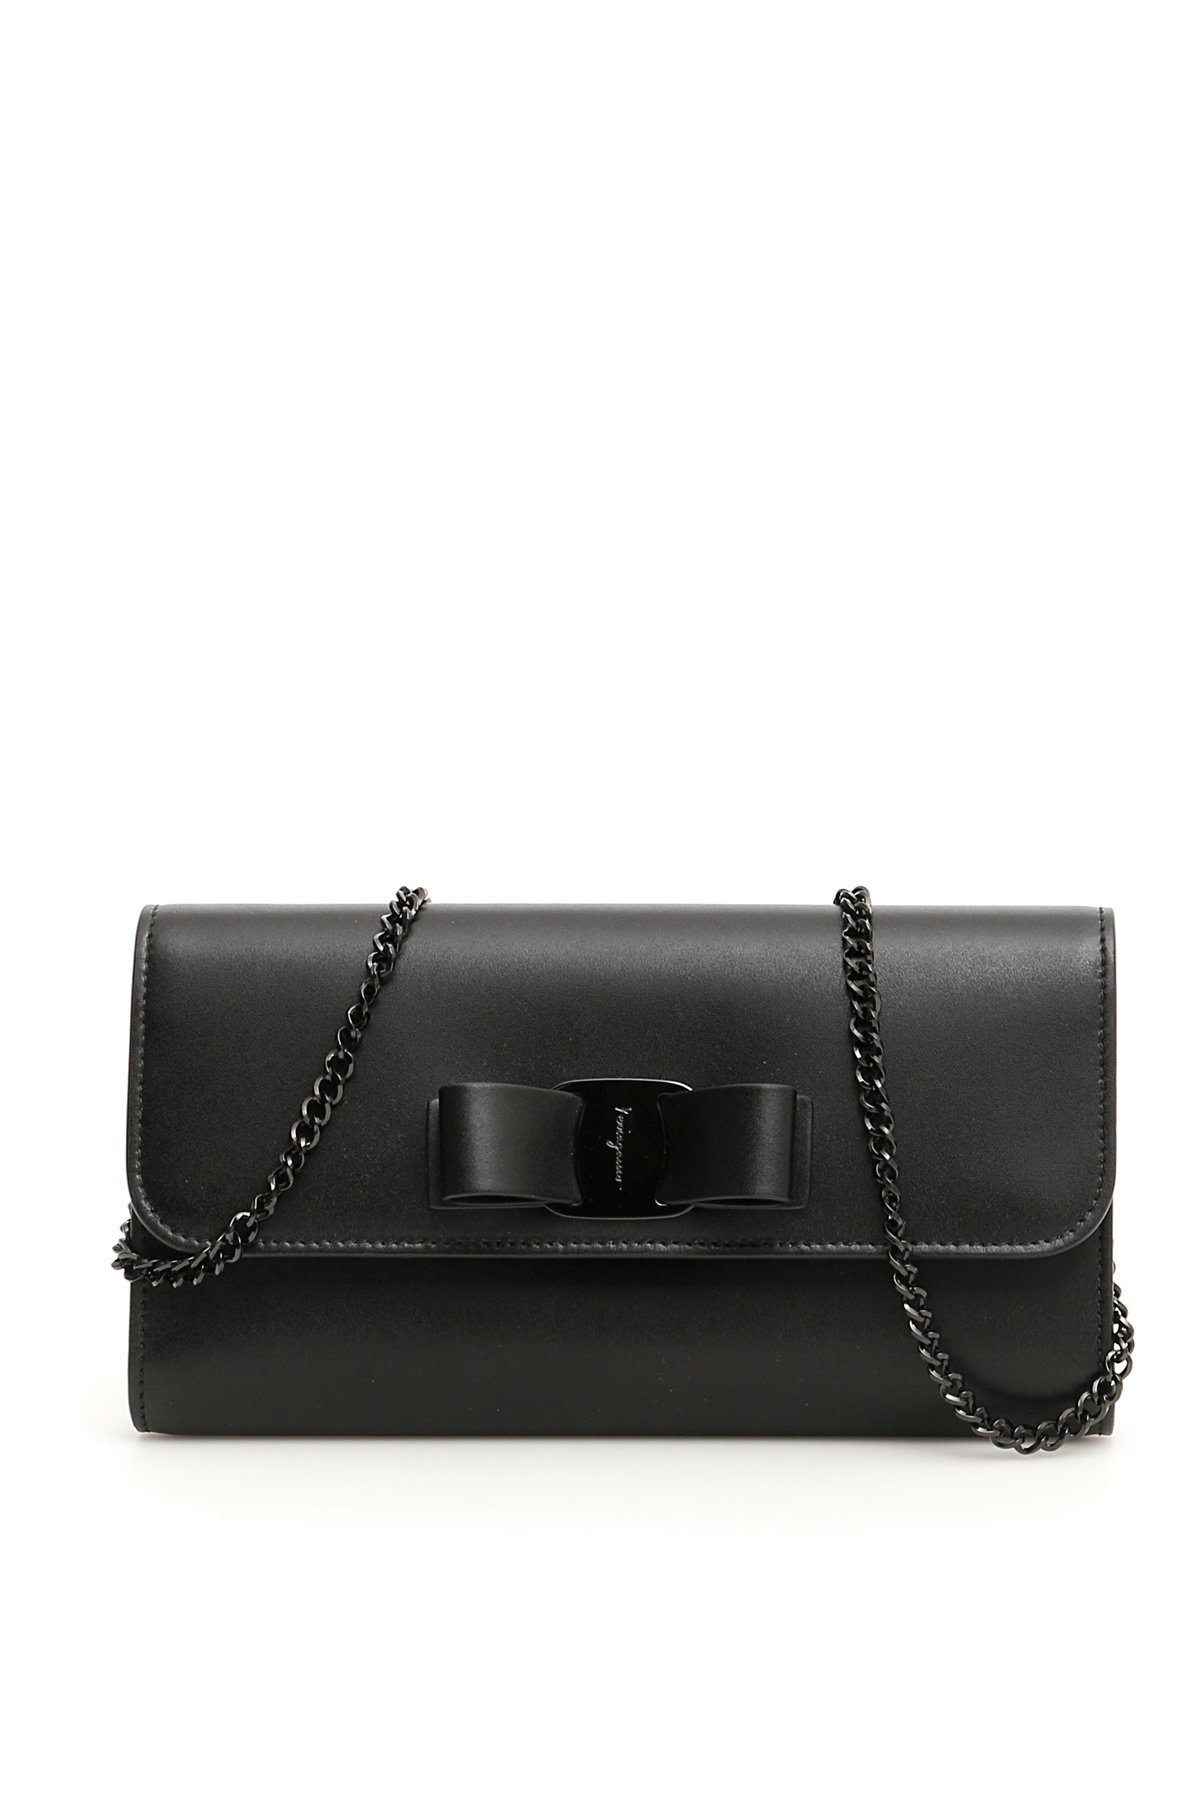 Salvatore Ferragamo Vara Clutch Bag In Black | ModeSens